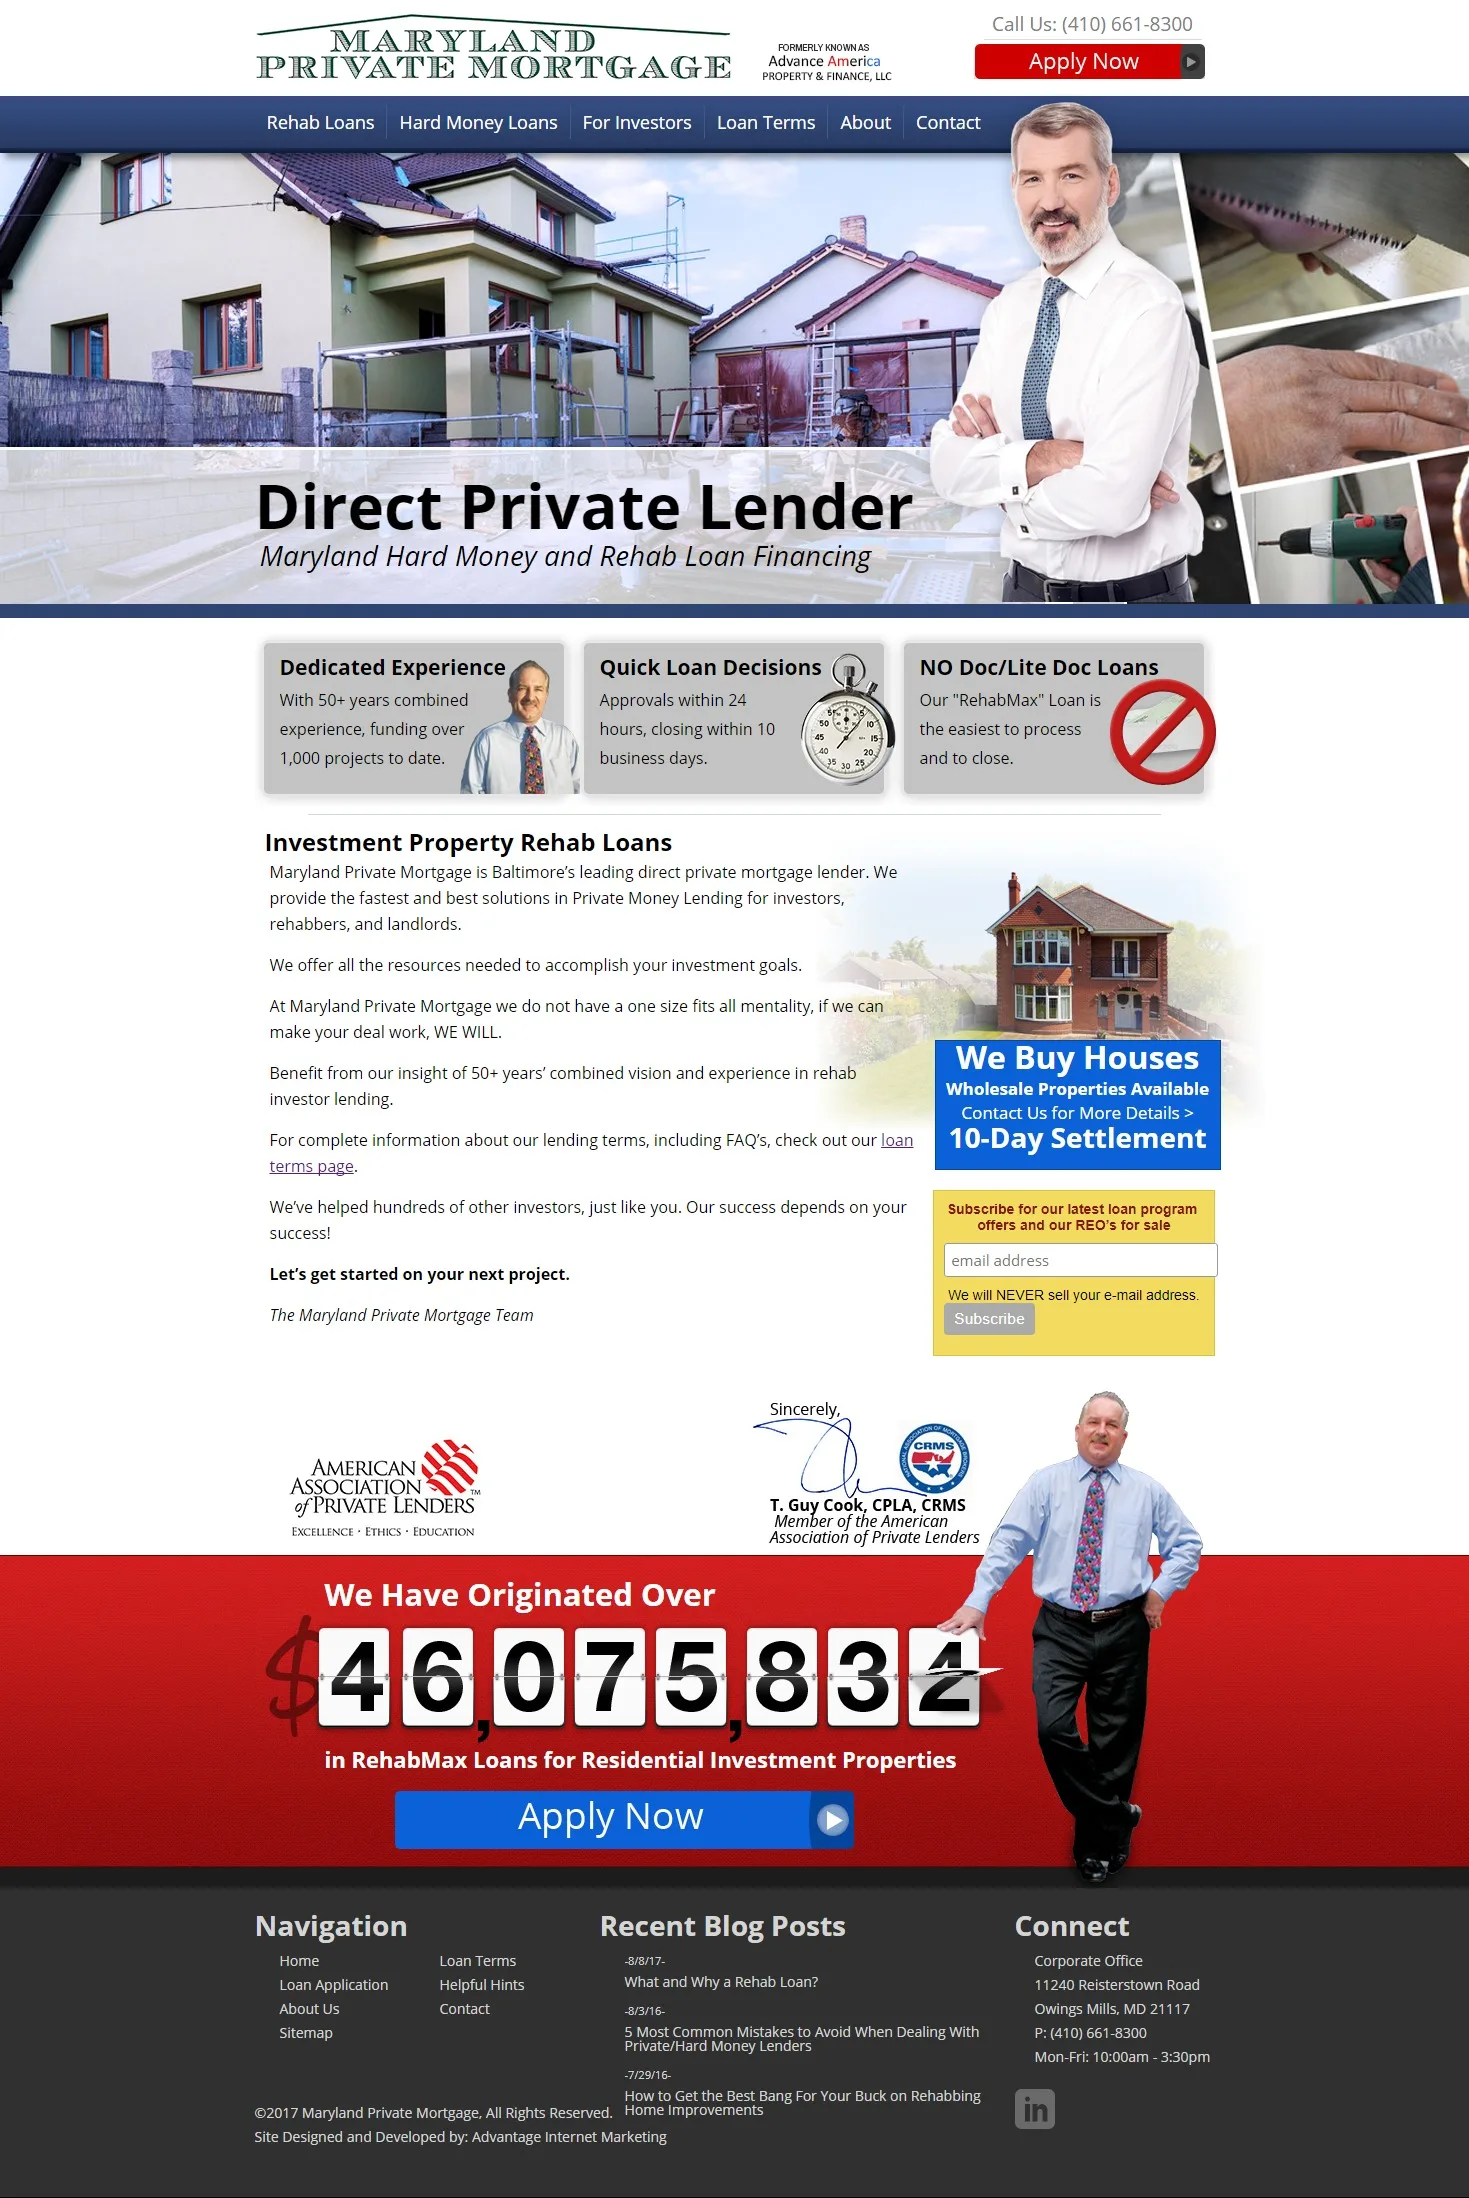 maryland private mortgage screenshot